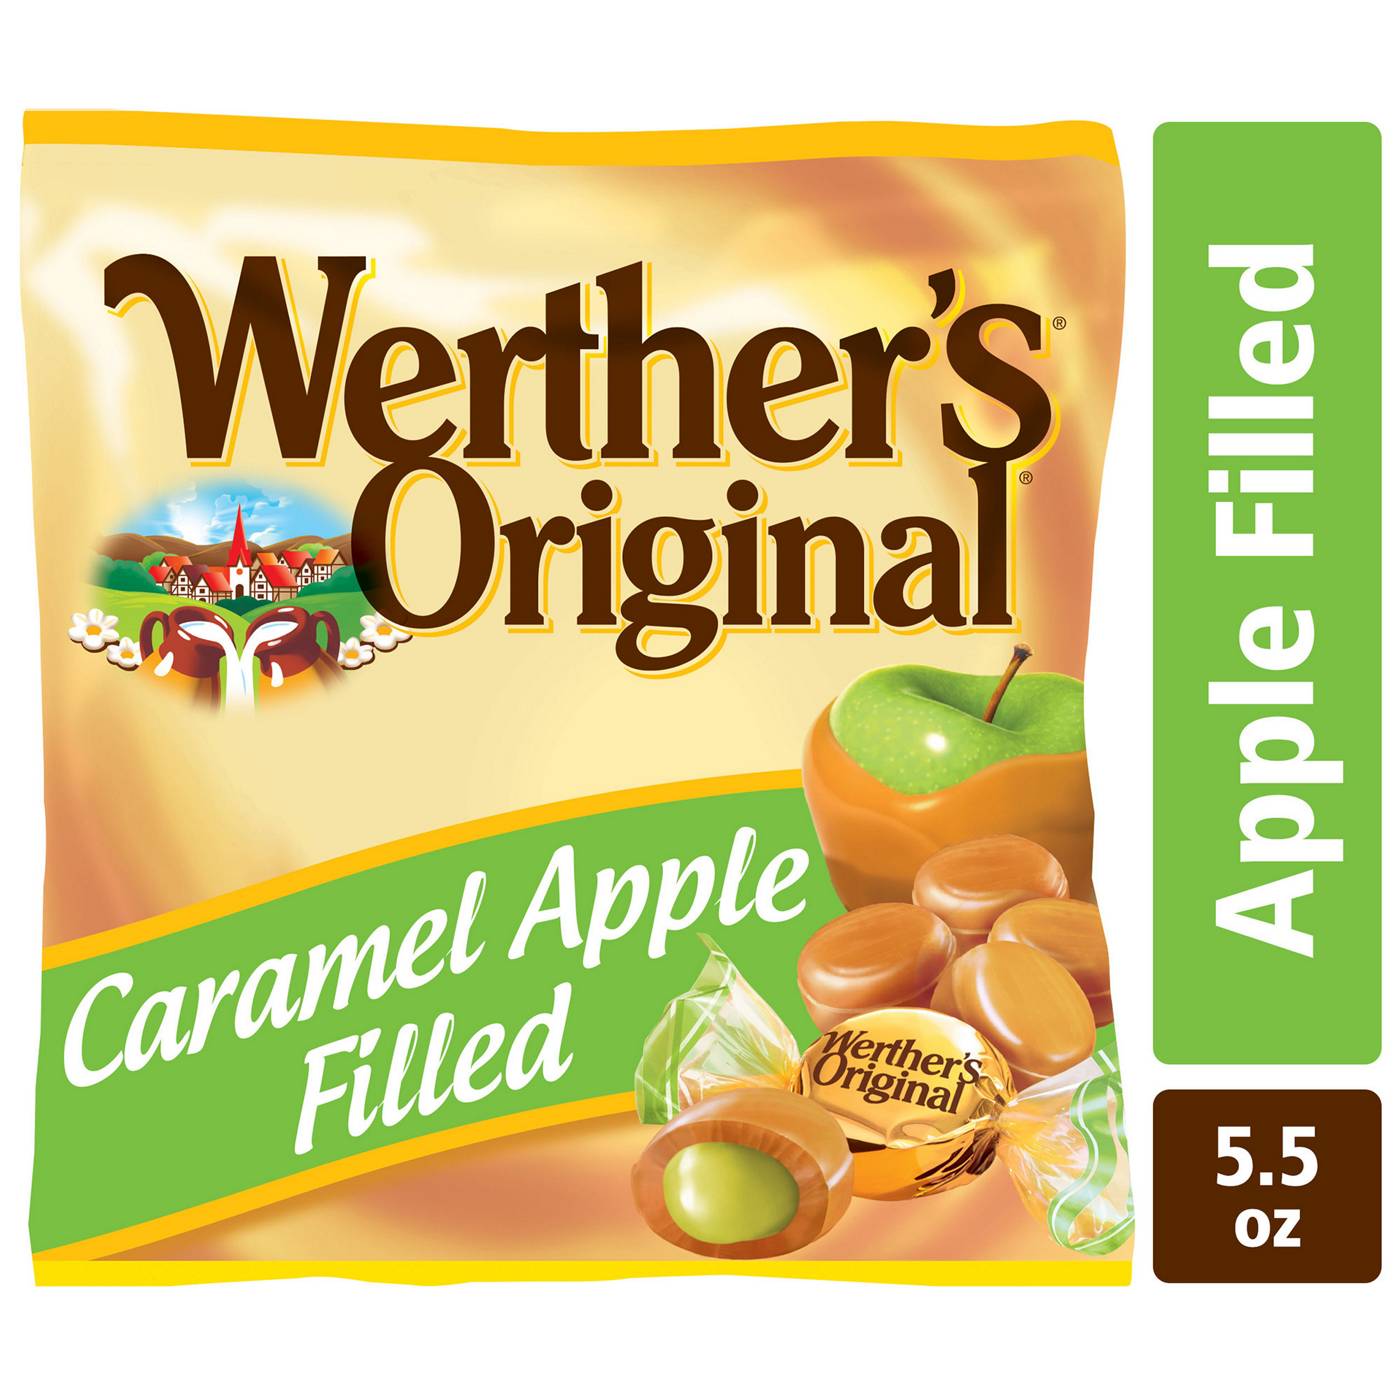 Werther's Original Hard Apple Filled Caramel Candy; image 2 of 6